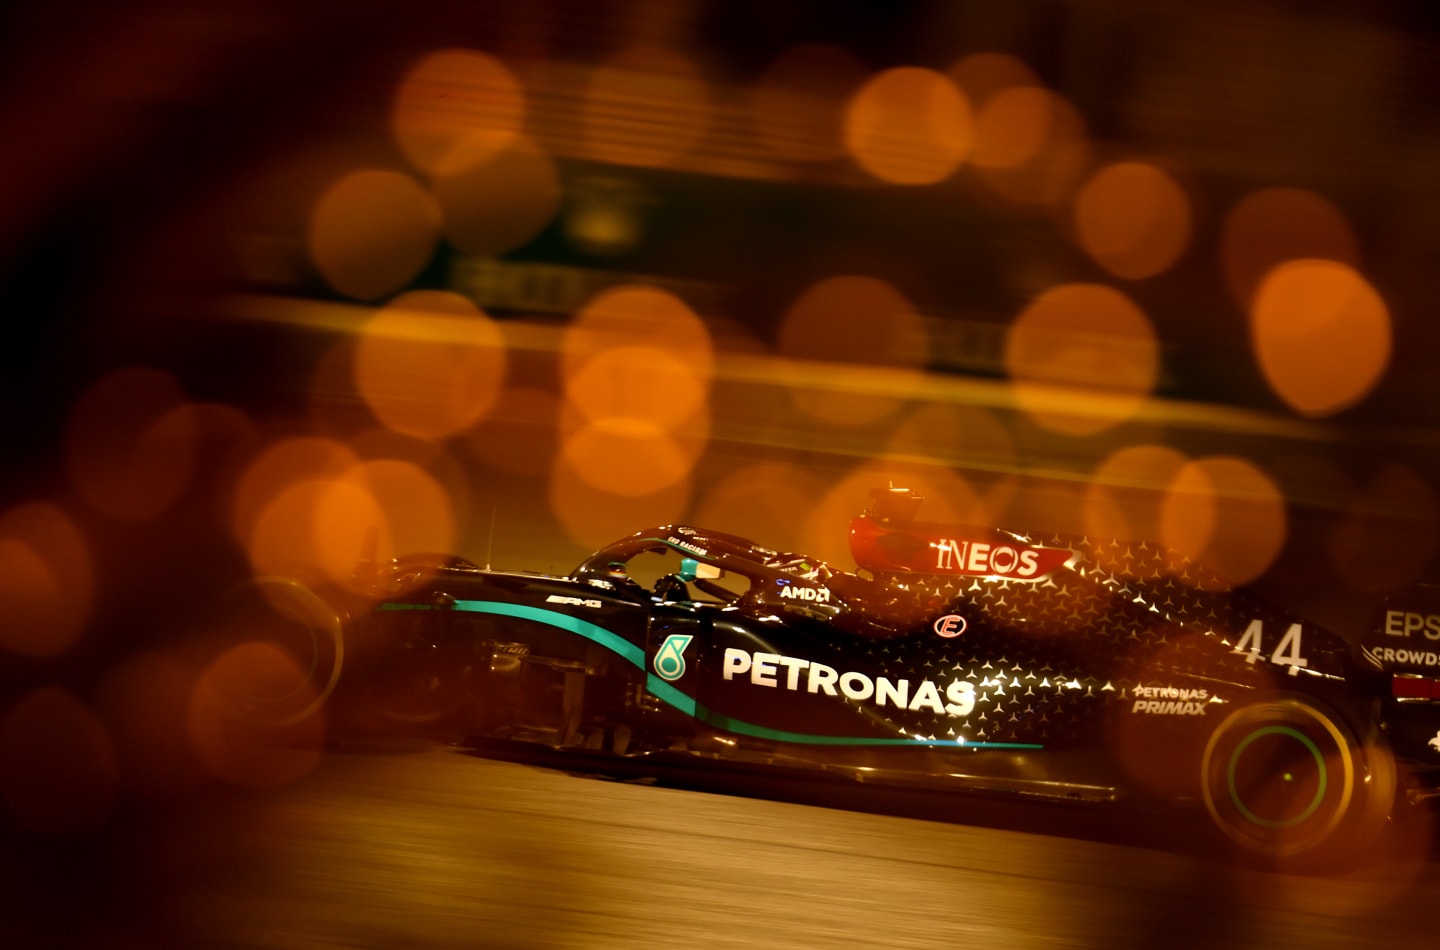 BAHRAIN, BAHRAIN - NOVEMBER 28: Lewis Hamilton of Great Britain driving the (44) Mercedes AMG Petronas F1 Team Mercedes W11 during qualifying ahead of the F1 Grand Prix of Bahrain at Bahrain International Circuit on November 28, 2020 in Bahrain, Bahrain. (Photo by Clive Mason - Formula 1/Formula 1 via Getty Images)